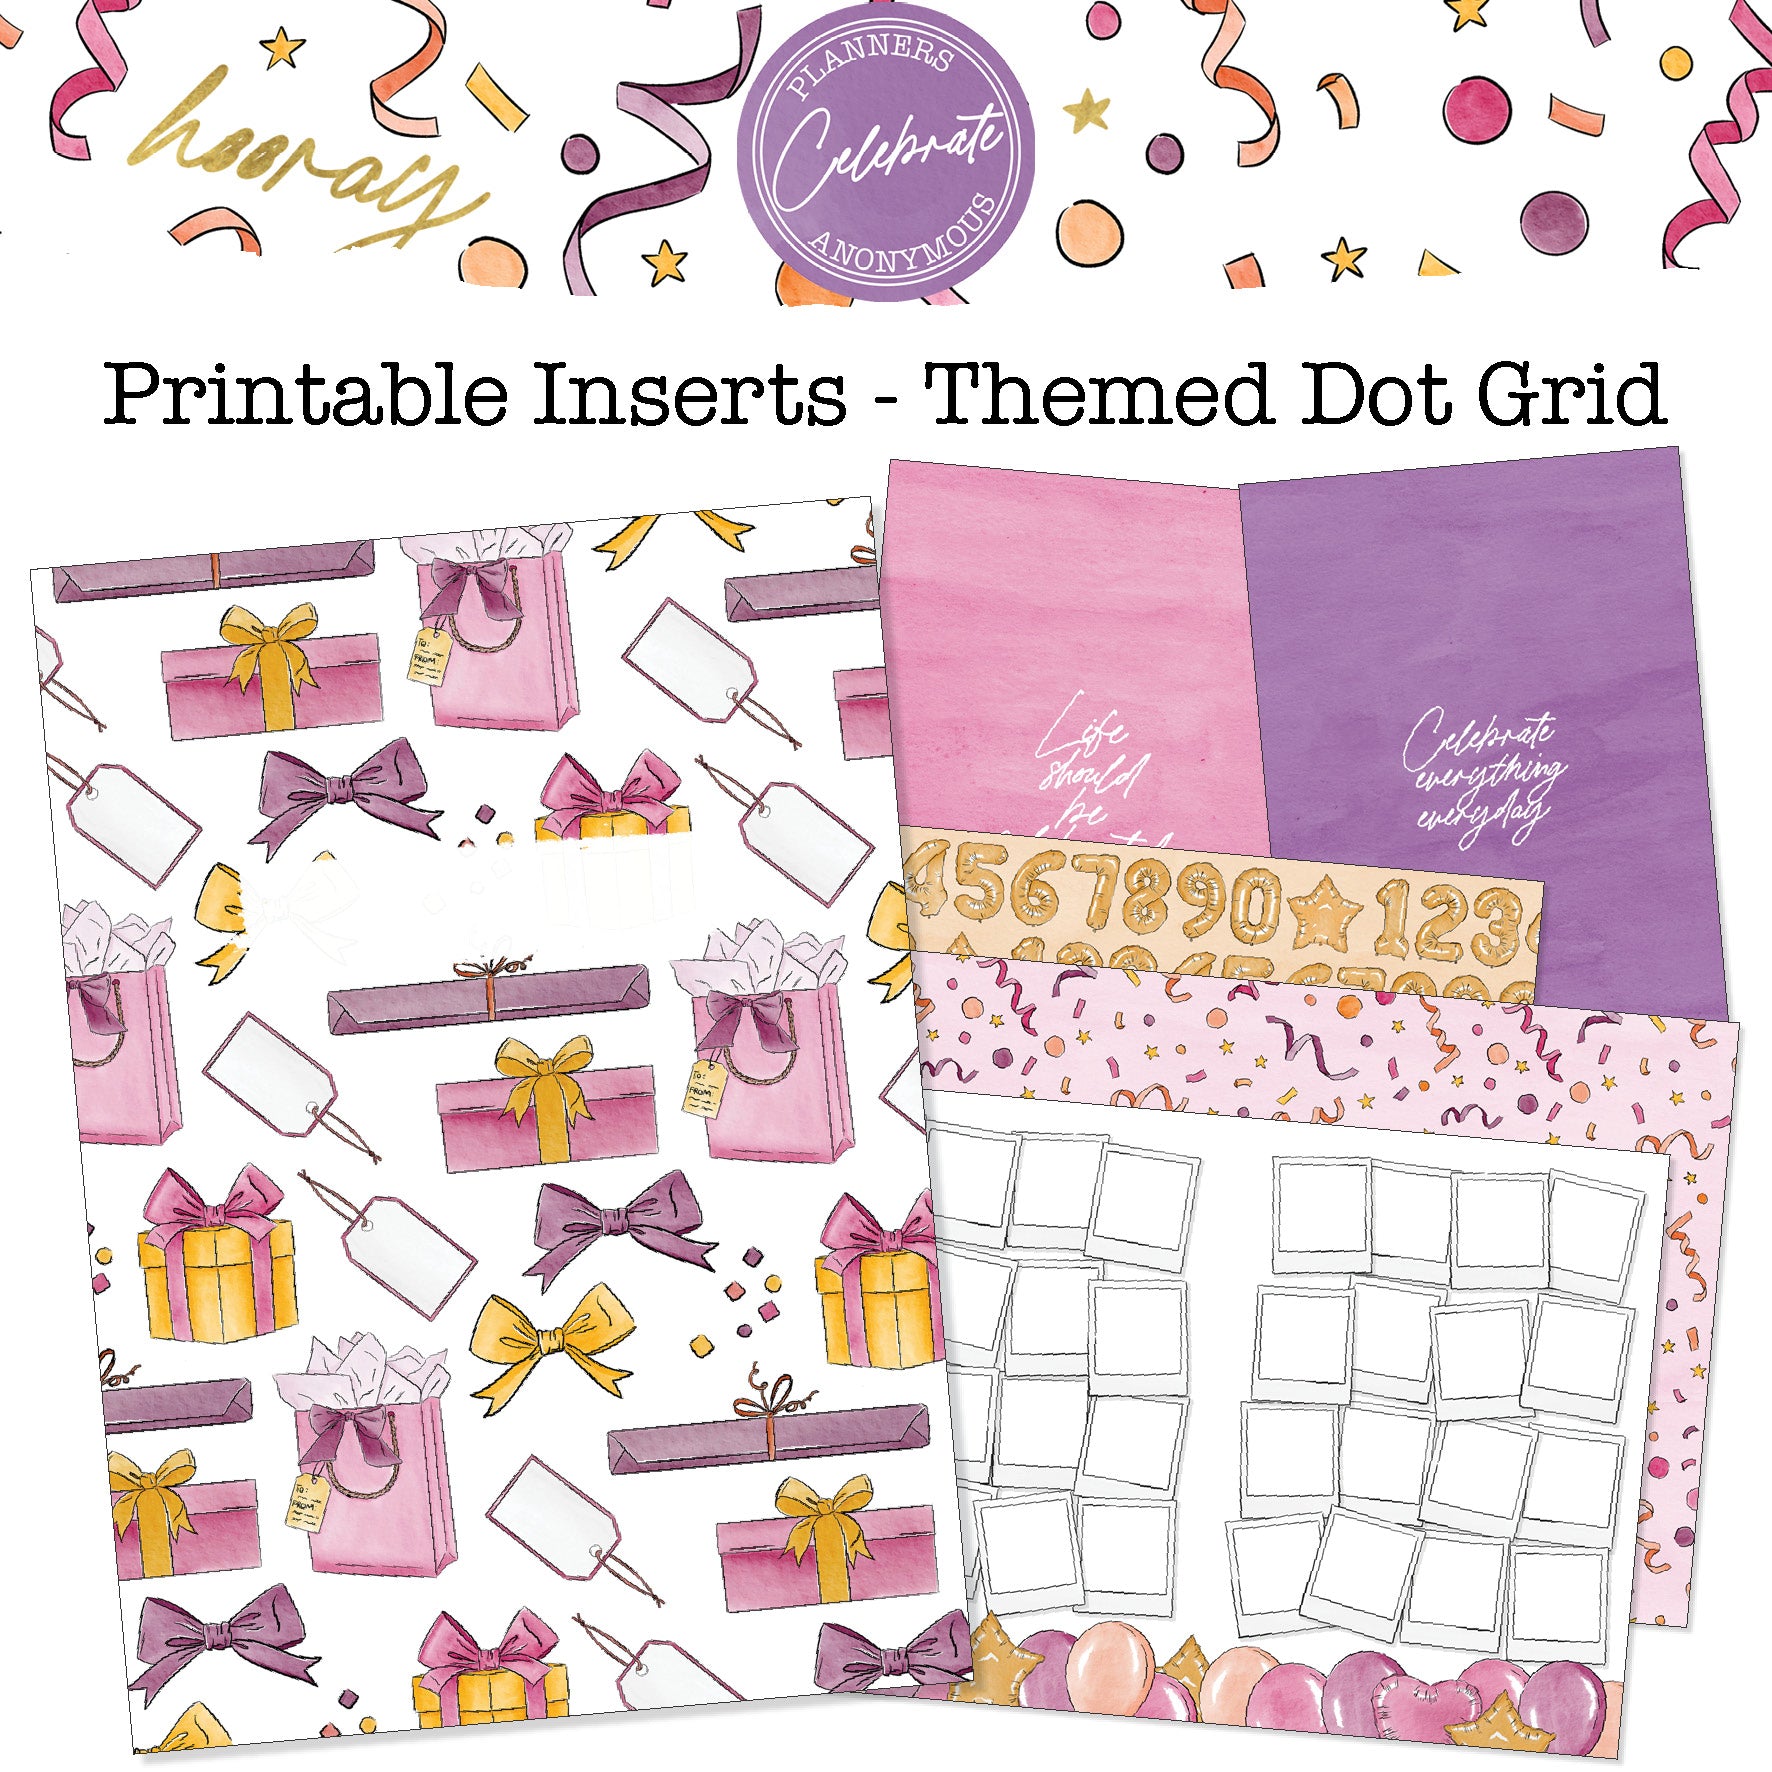 Celebrate - Printable Inserts - Themed Dot Grid